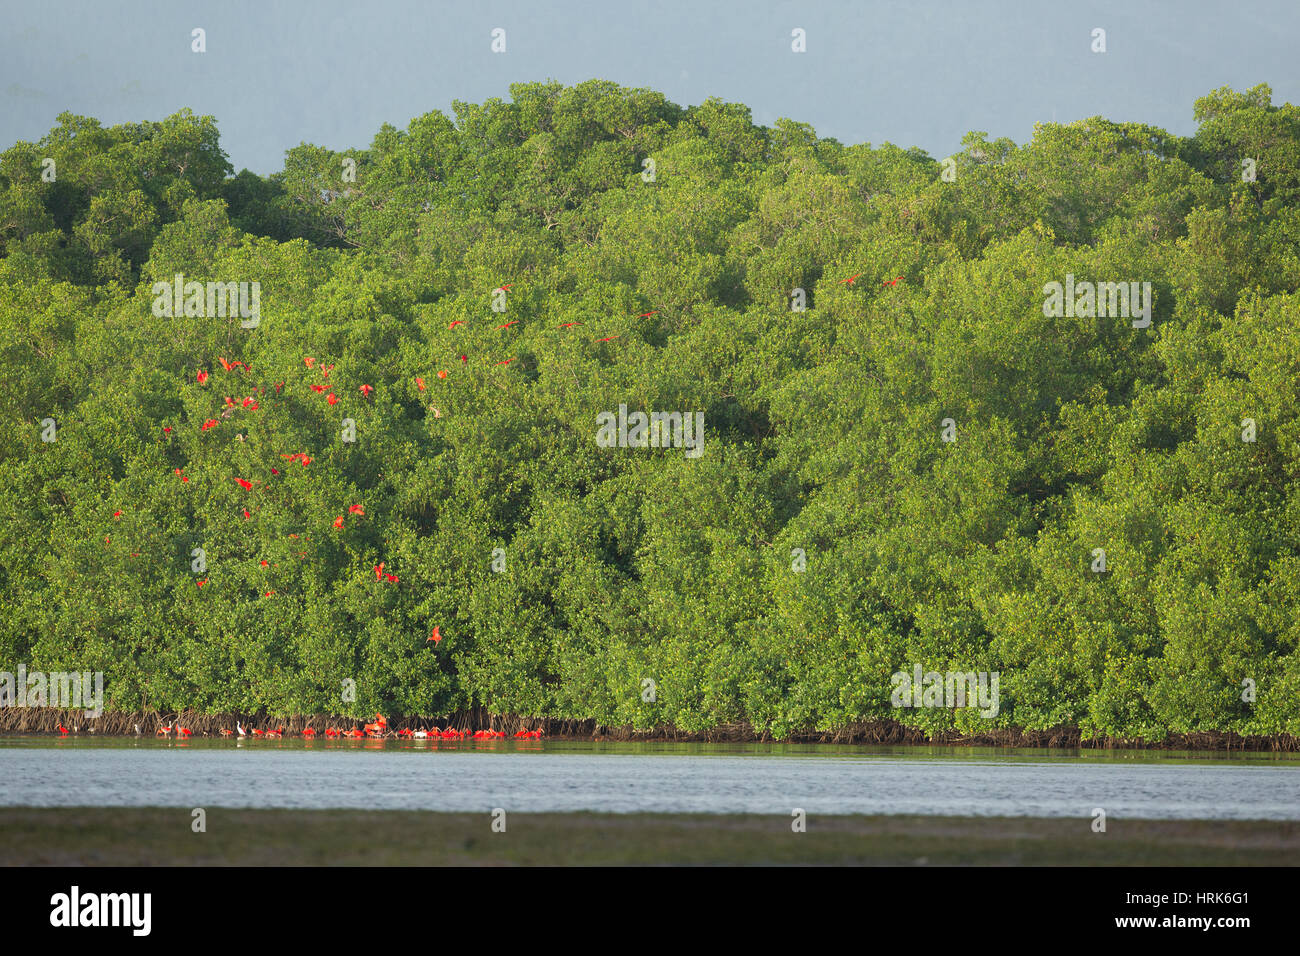 Ibis rouge (Eudocimus ruber). Banque D'Images